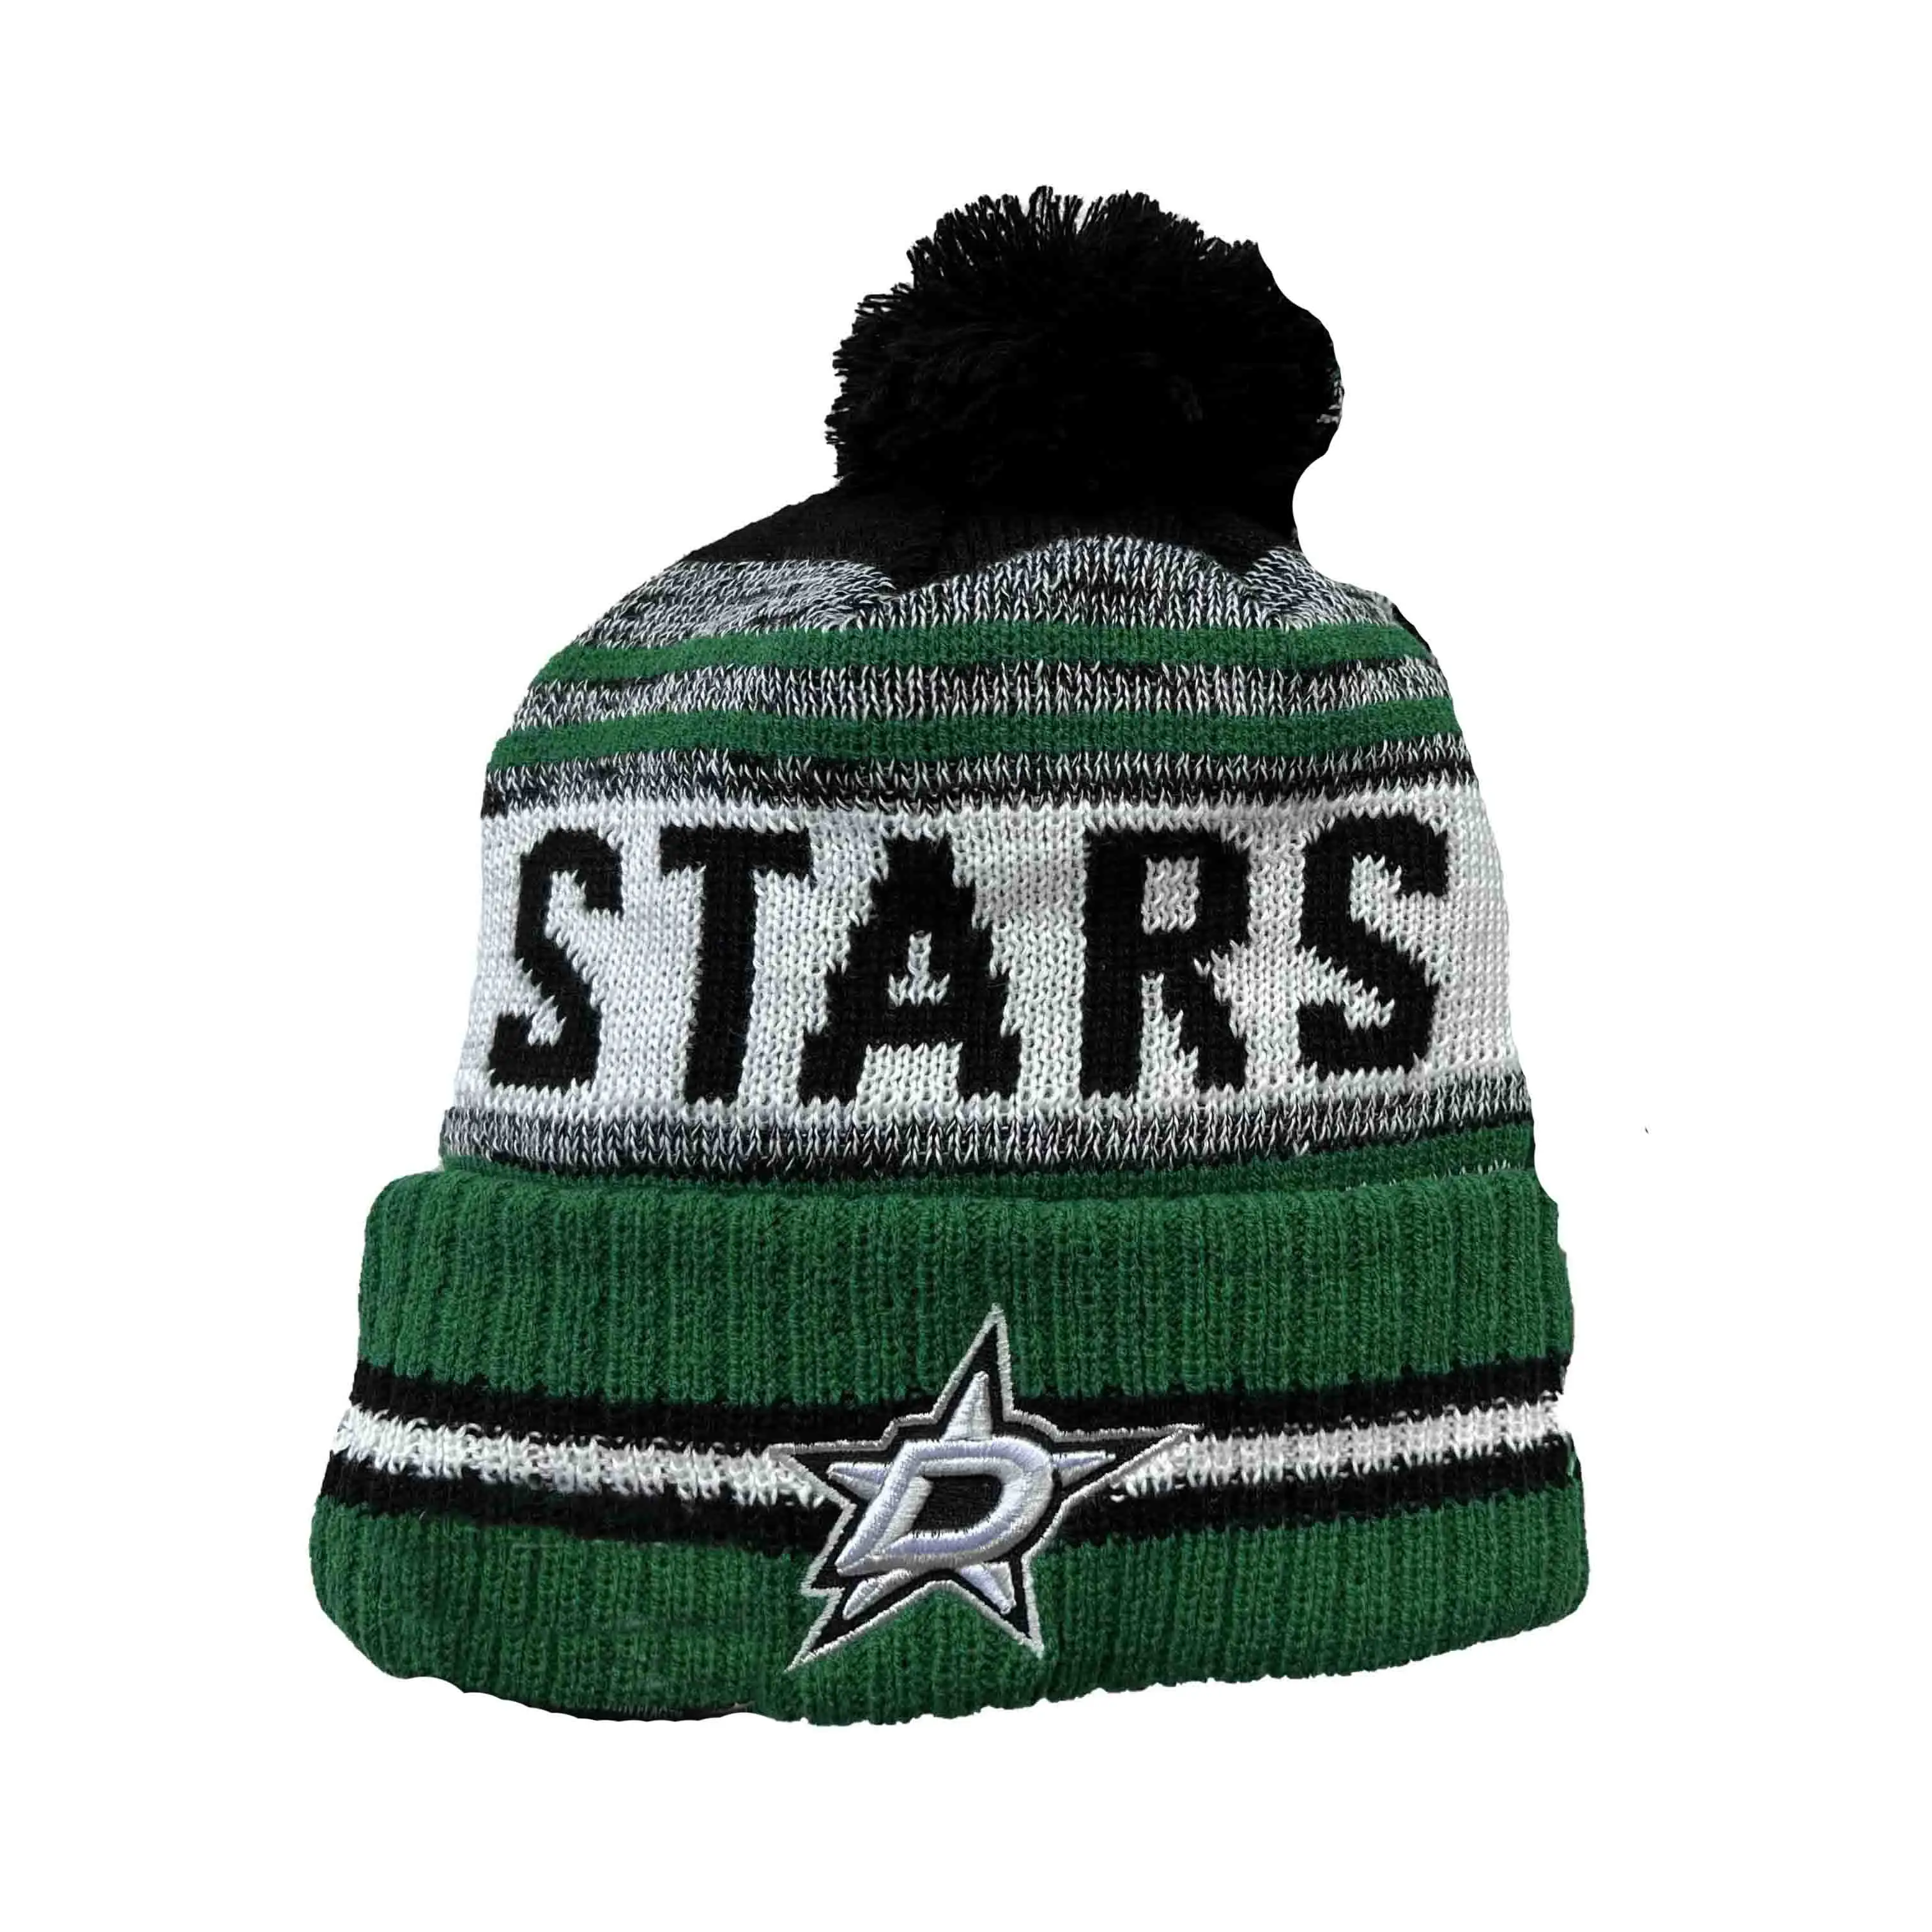 

Ice hockey Beanie Hat With Team Name And Logo Ice hockey Knit Hats Winter Cuffed Stylish Beanie Cap Sport Fans Fashion Cap